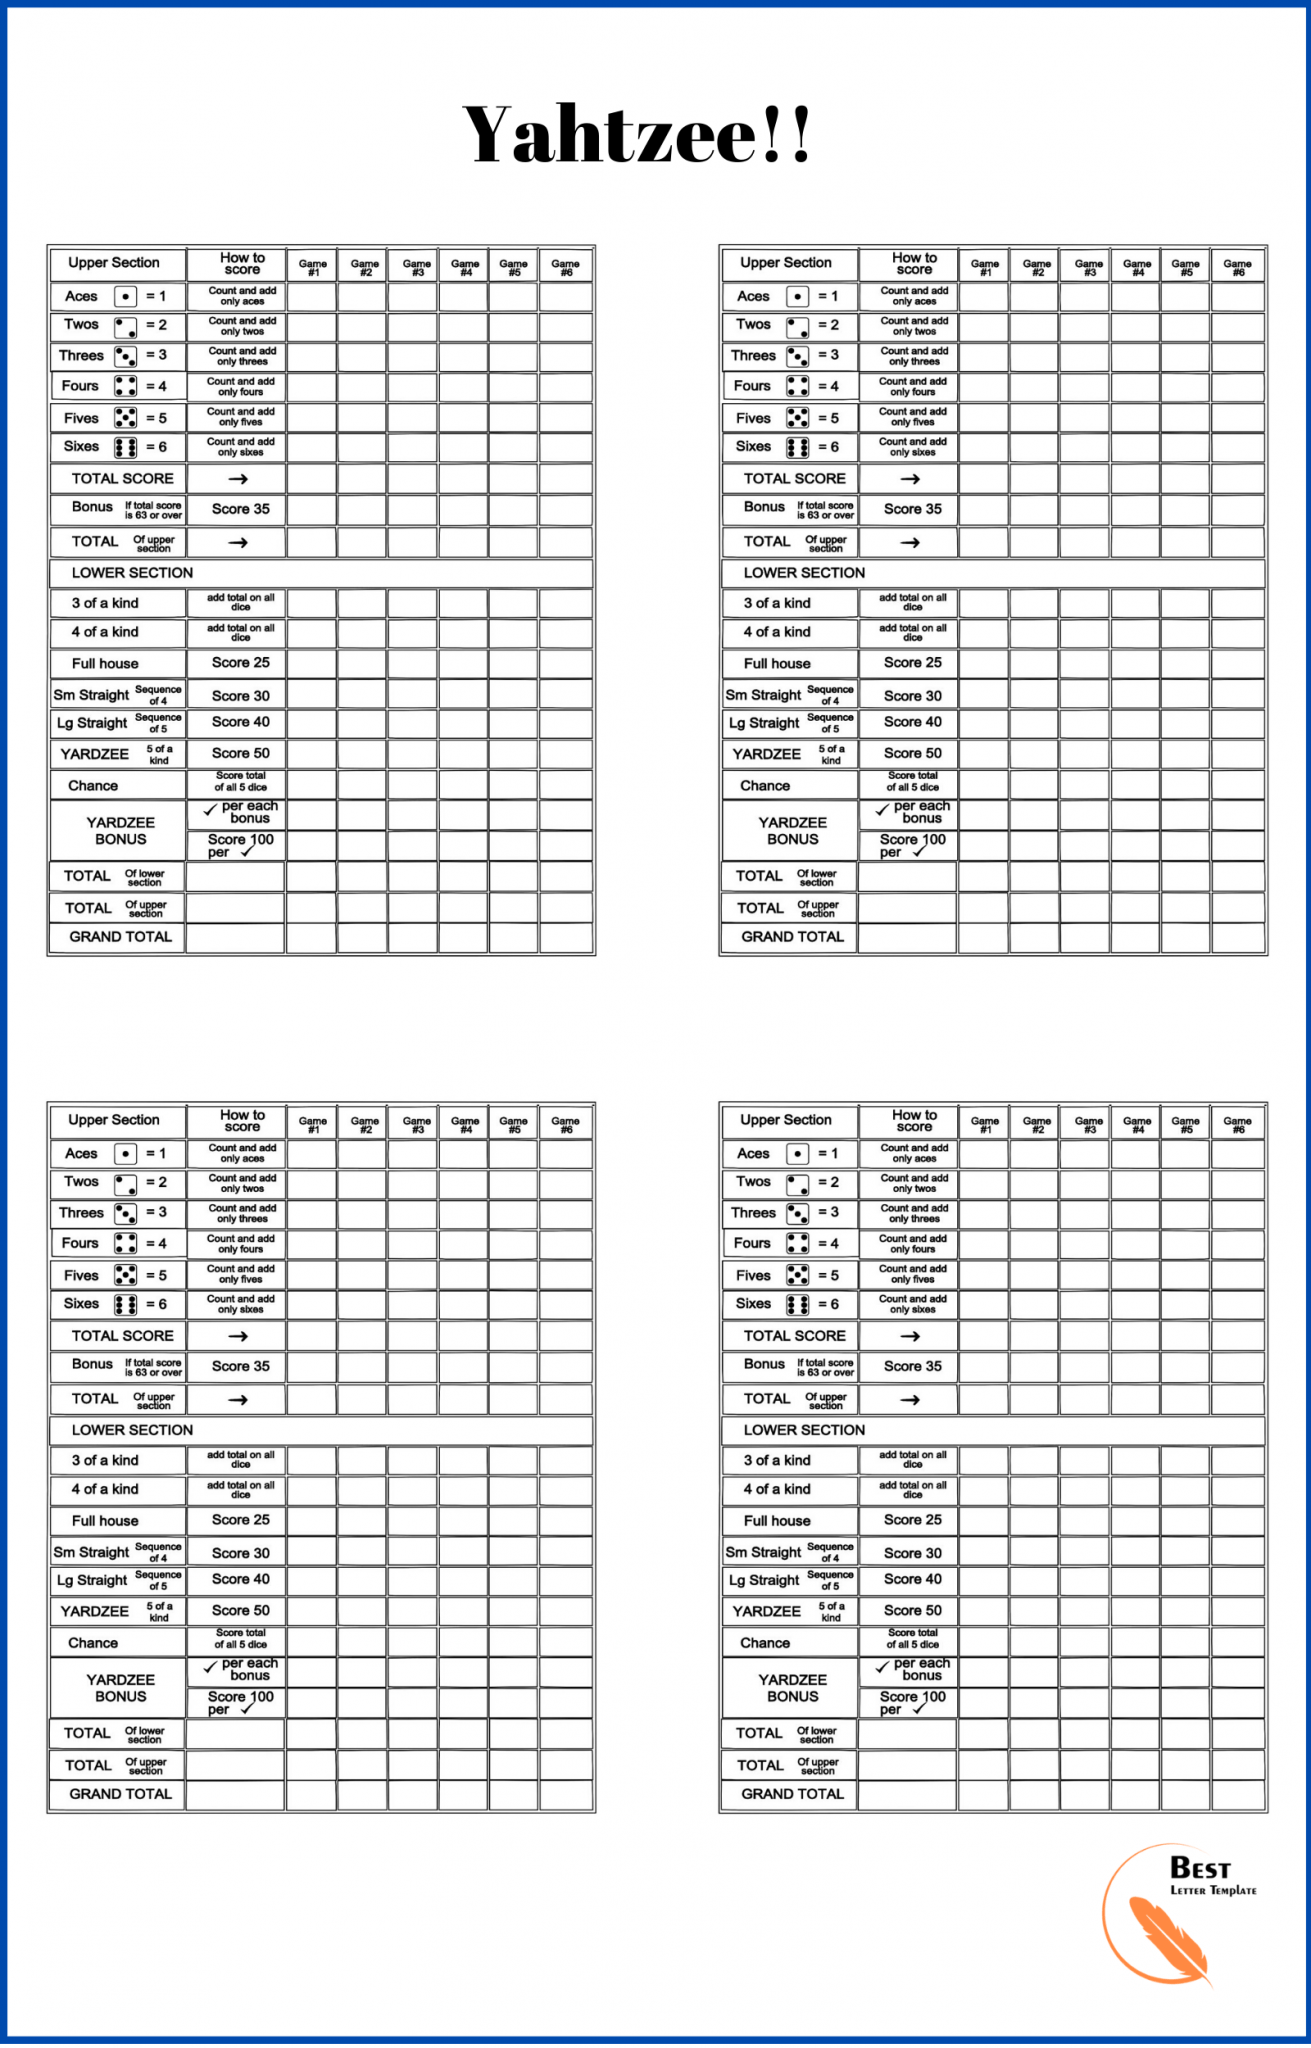 printable-yahtzee-score-cards-sheet-pdf-online